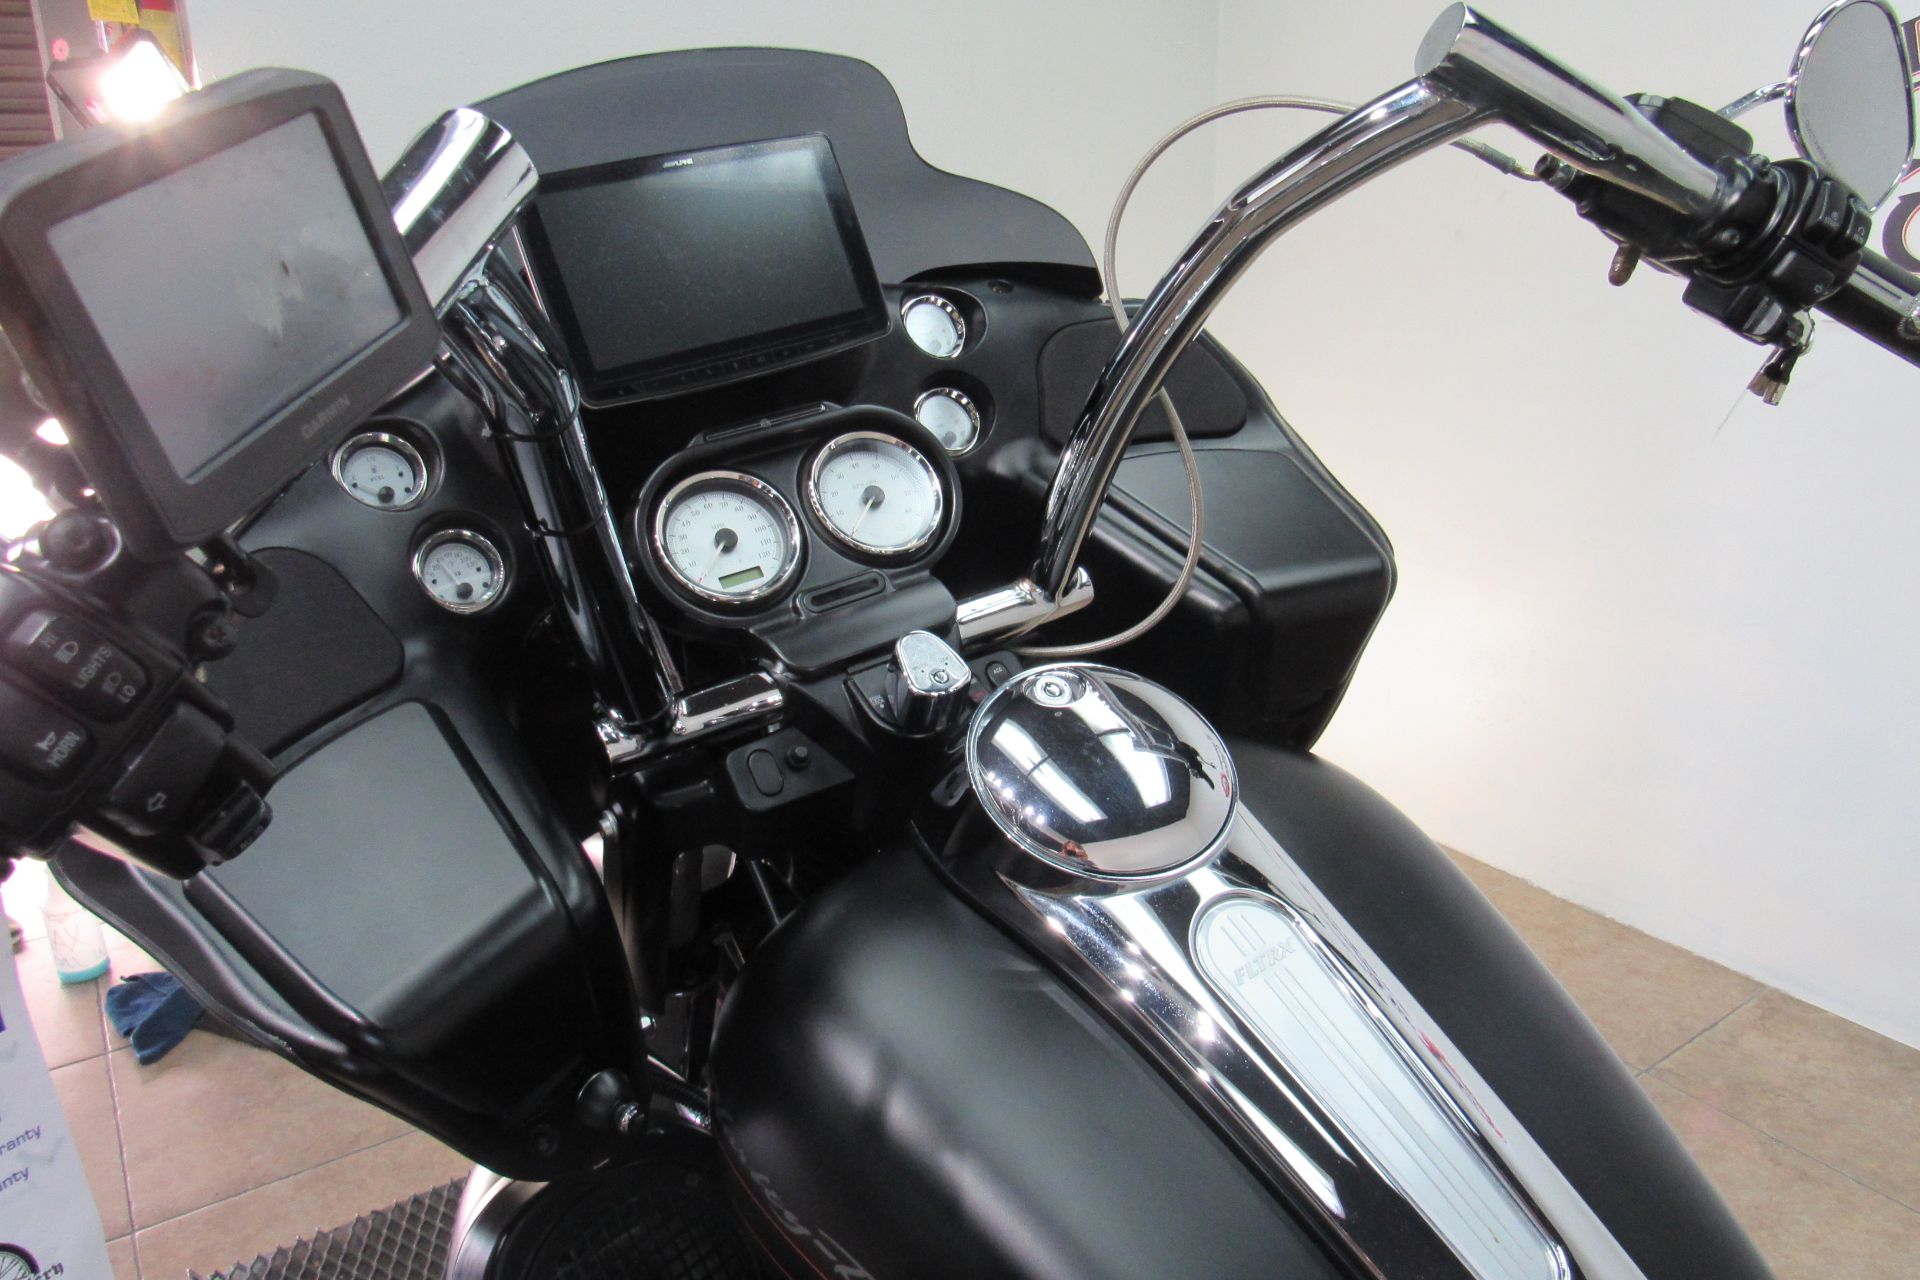 2013 Harley-Davidson Road Glide® Custom in Temecula, California - Photo 26